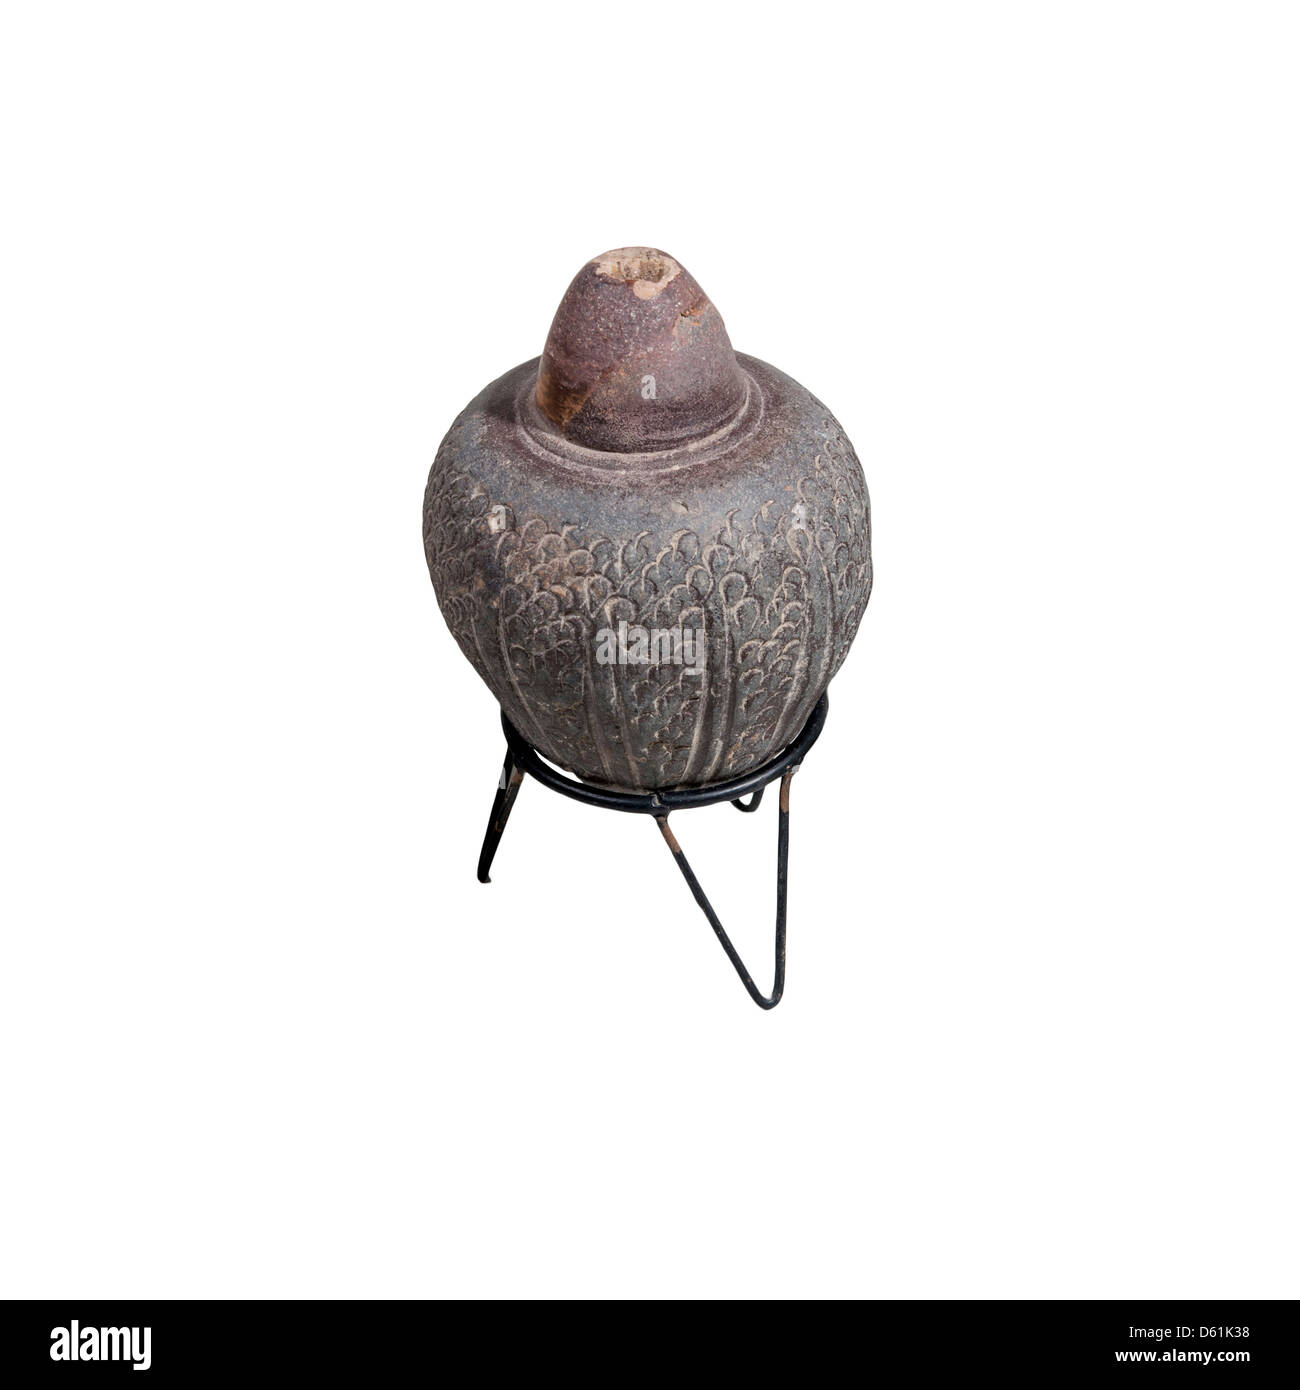 A Ceramic Fire-Bomb 6-9th century CE on white Stock Photo